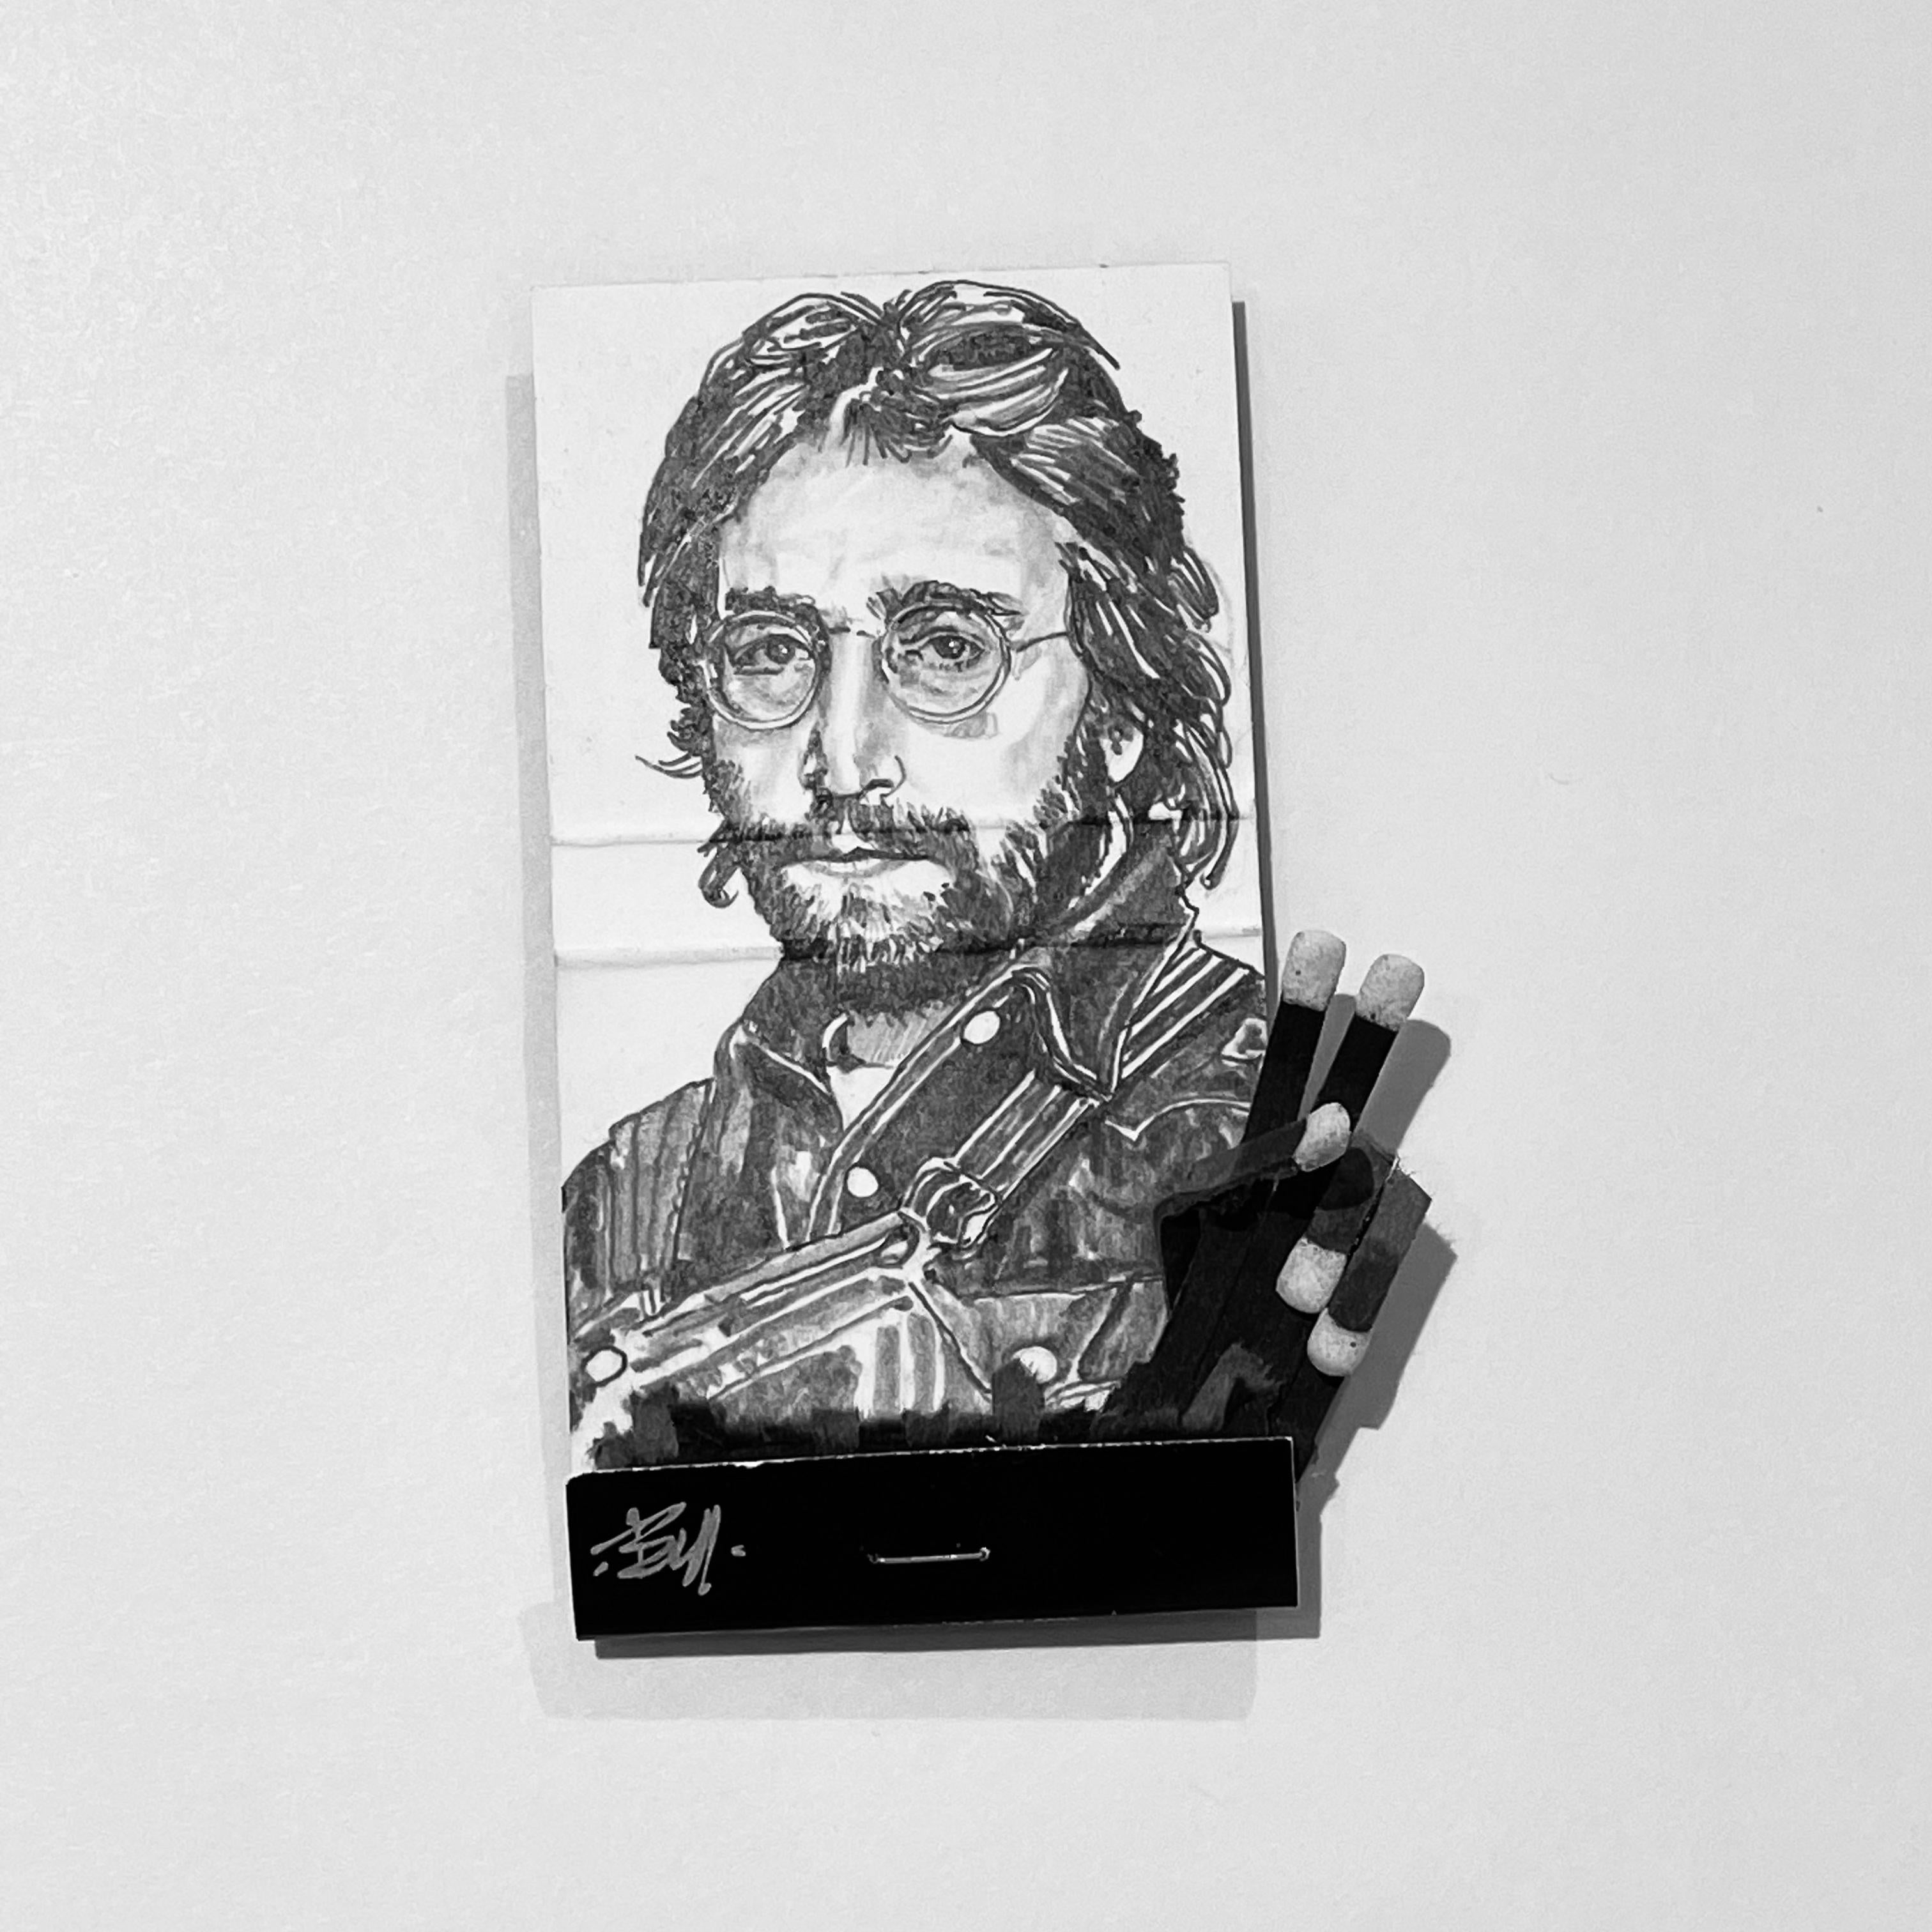 MB visual Portrait - John Lennon - figurative black and white portrait pencil drawing on matchbox